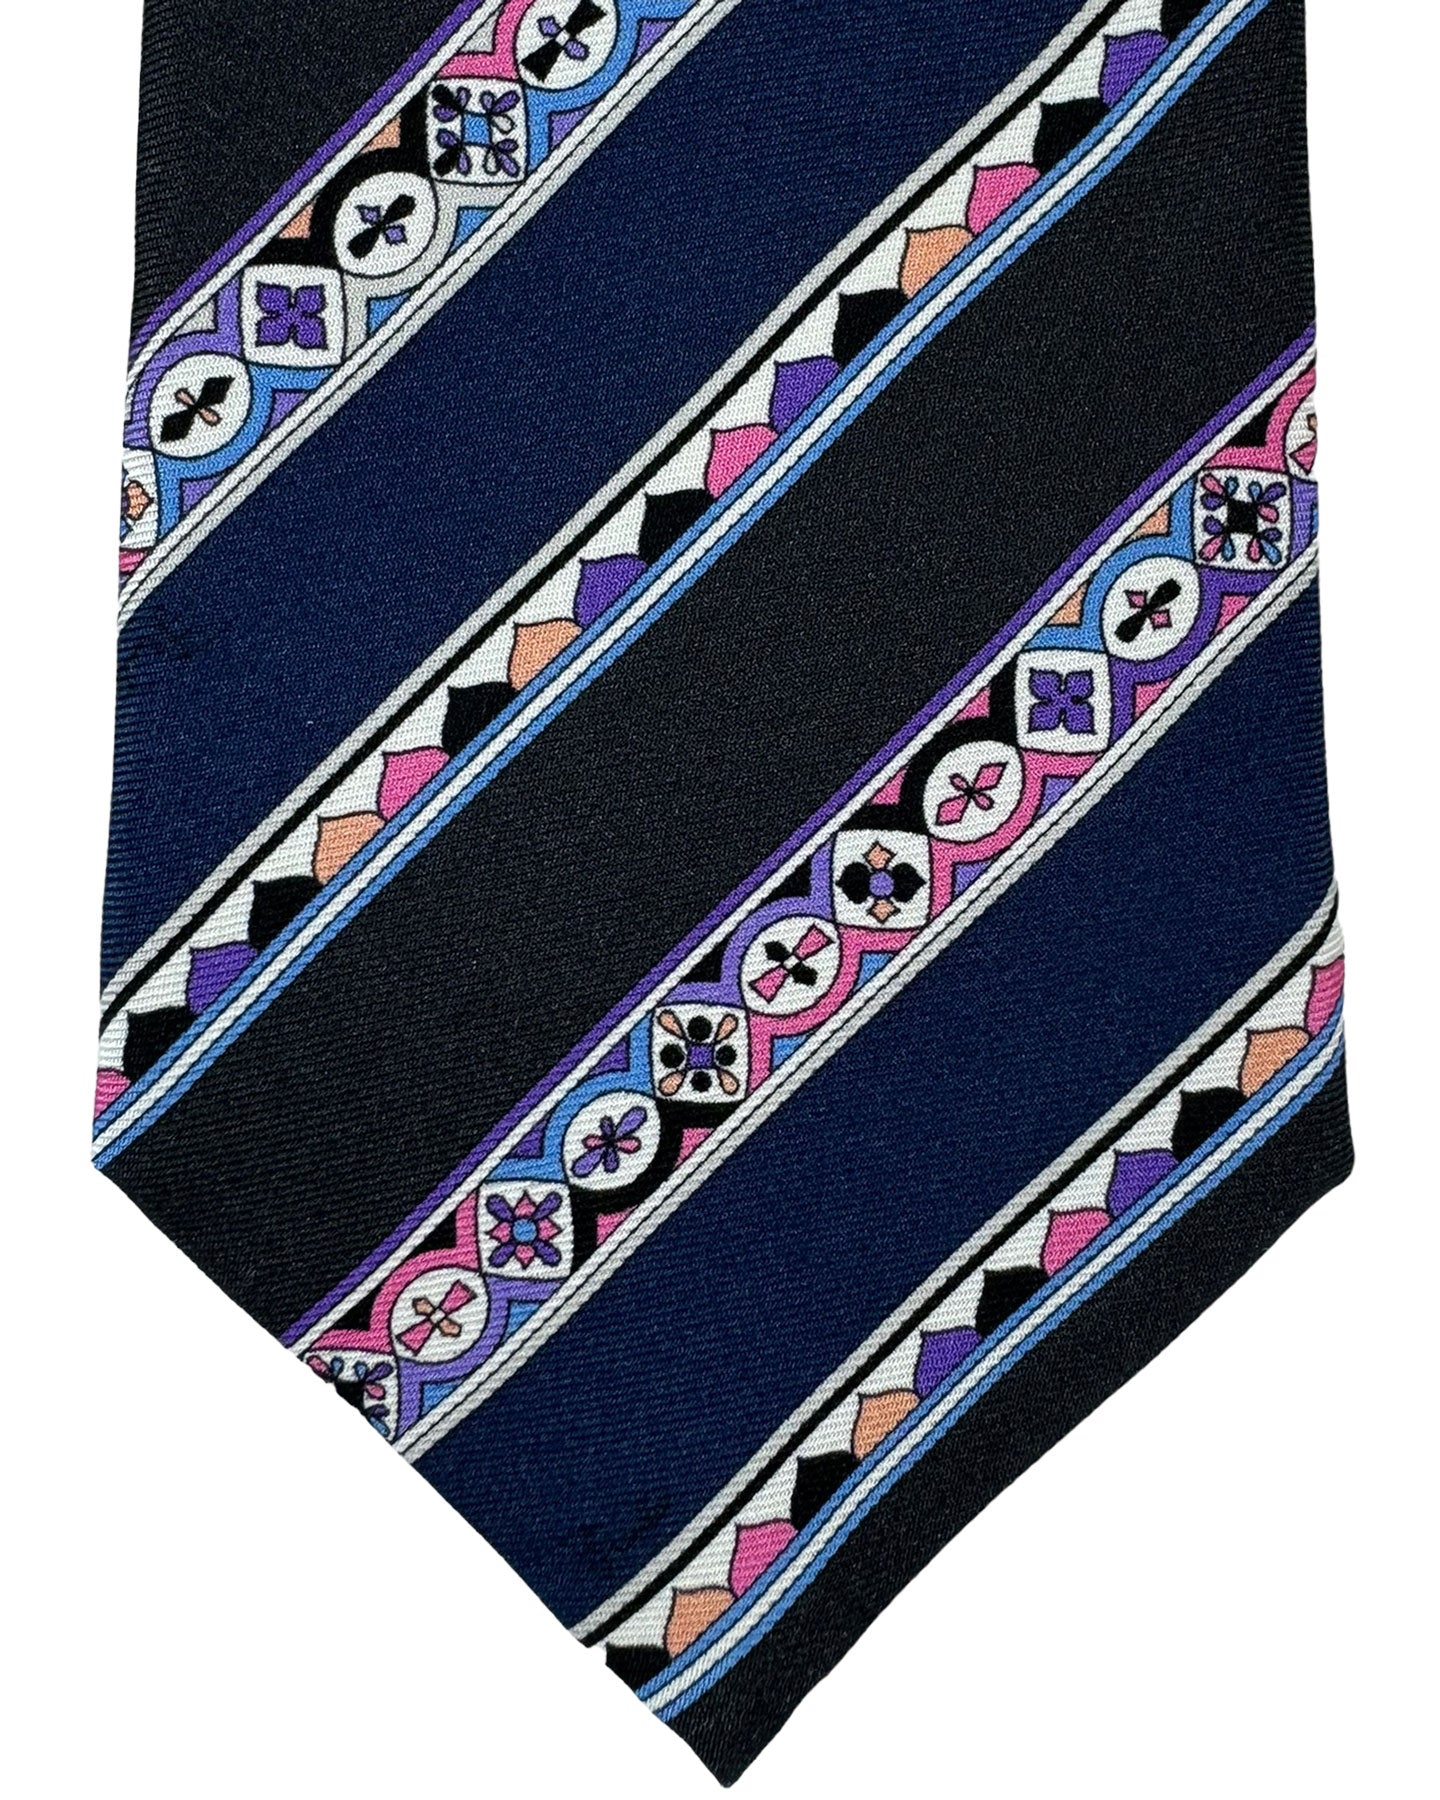 Emilio Pucci Silk Tie Signature Dark Blue Black Pink Purple Stripes Design